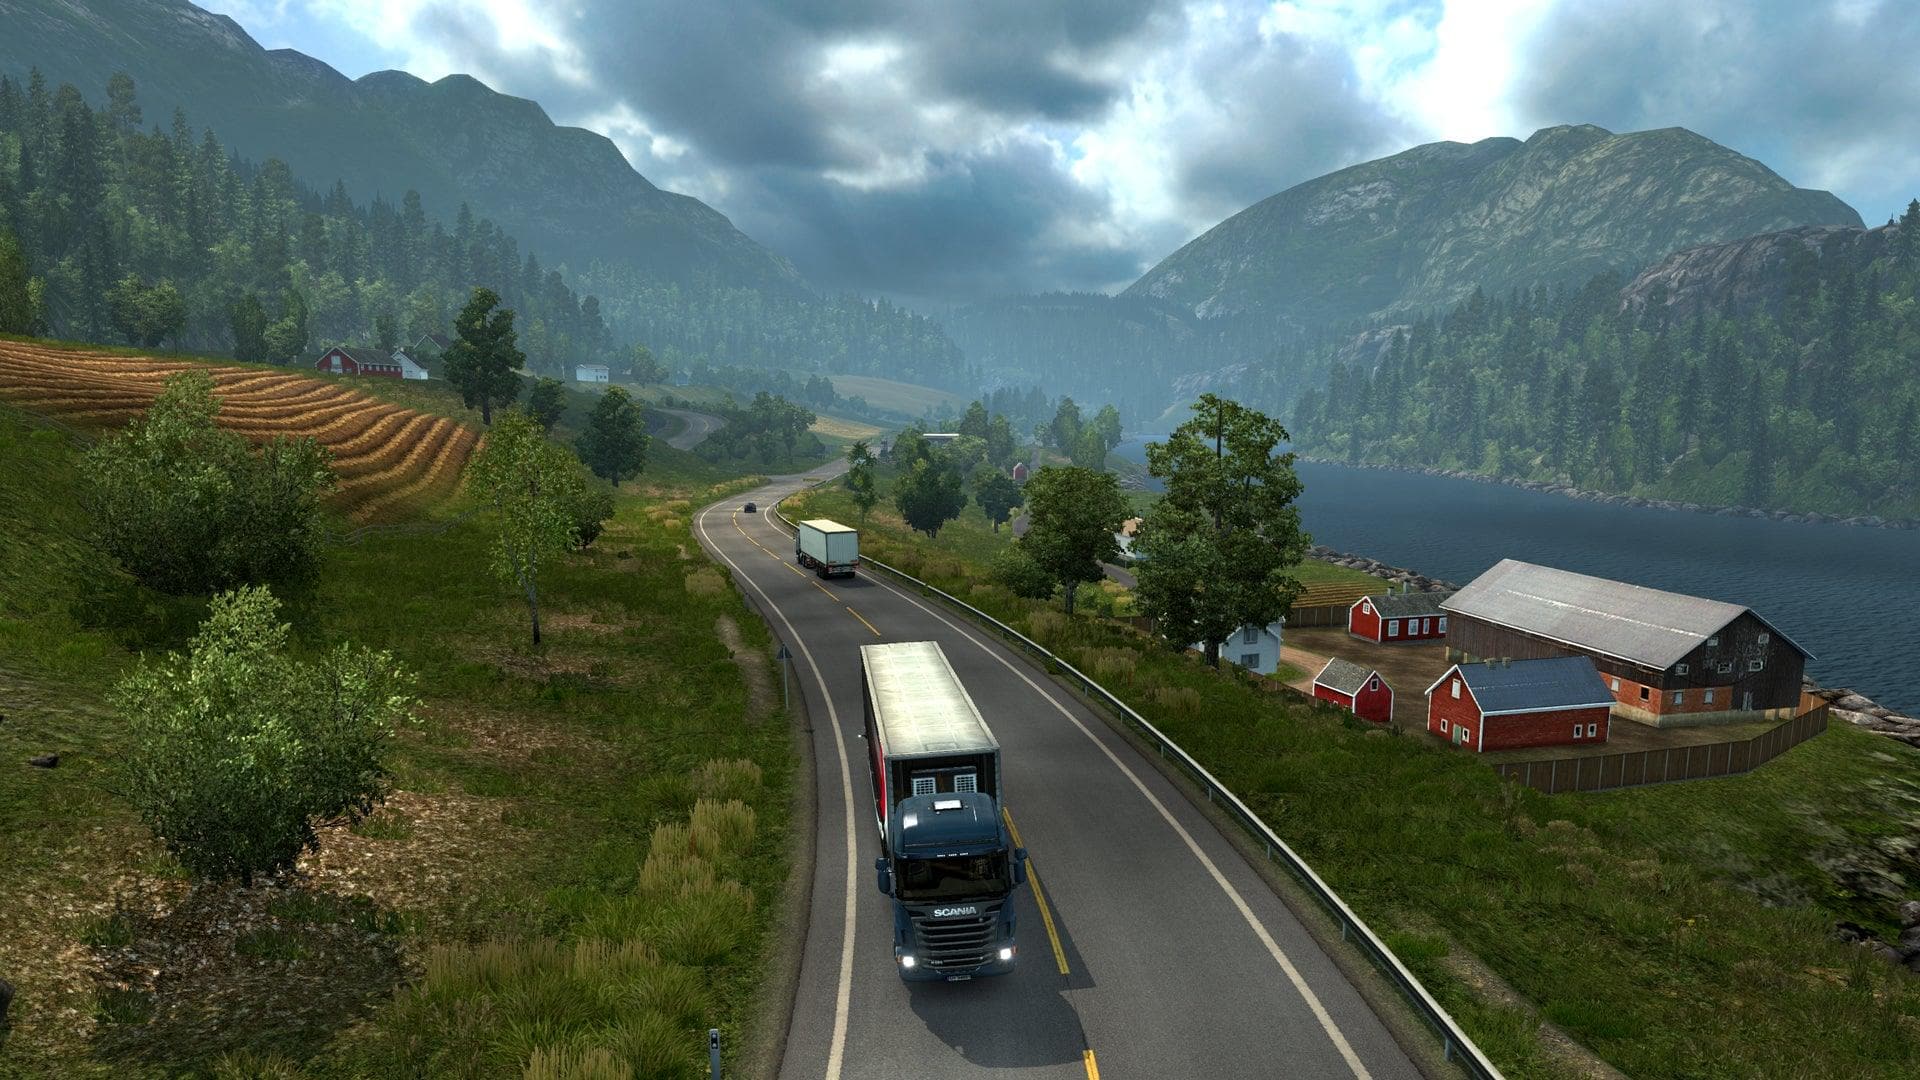 Euro Truck Simulator 2: Scandinavia - למחשב - EXON - גיימינג ותוכנות - משחקים ותוכנות למחשב ולאקס בוקס!